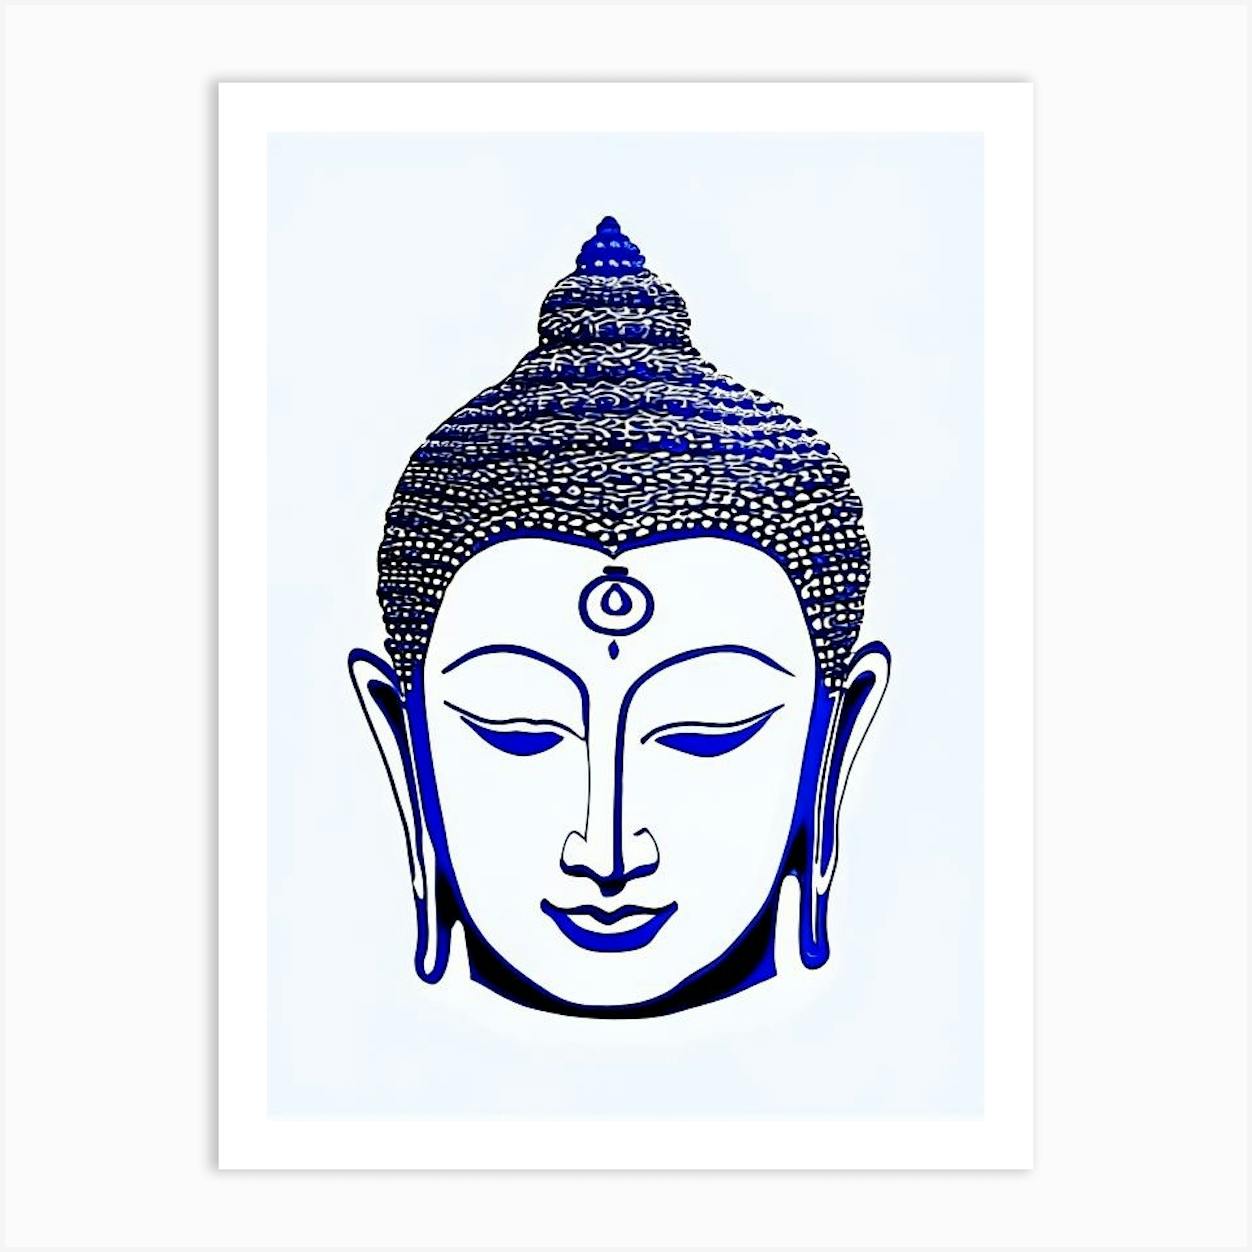 buddhism symbol png